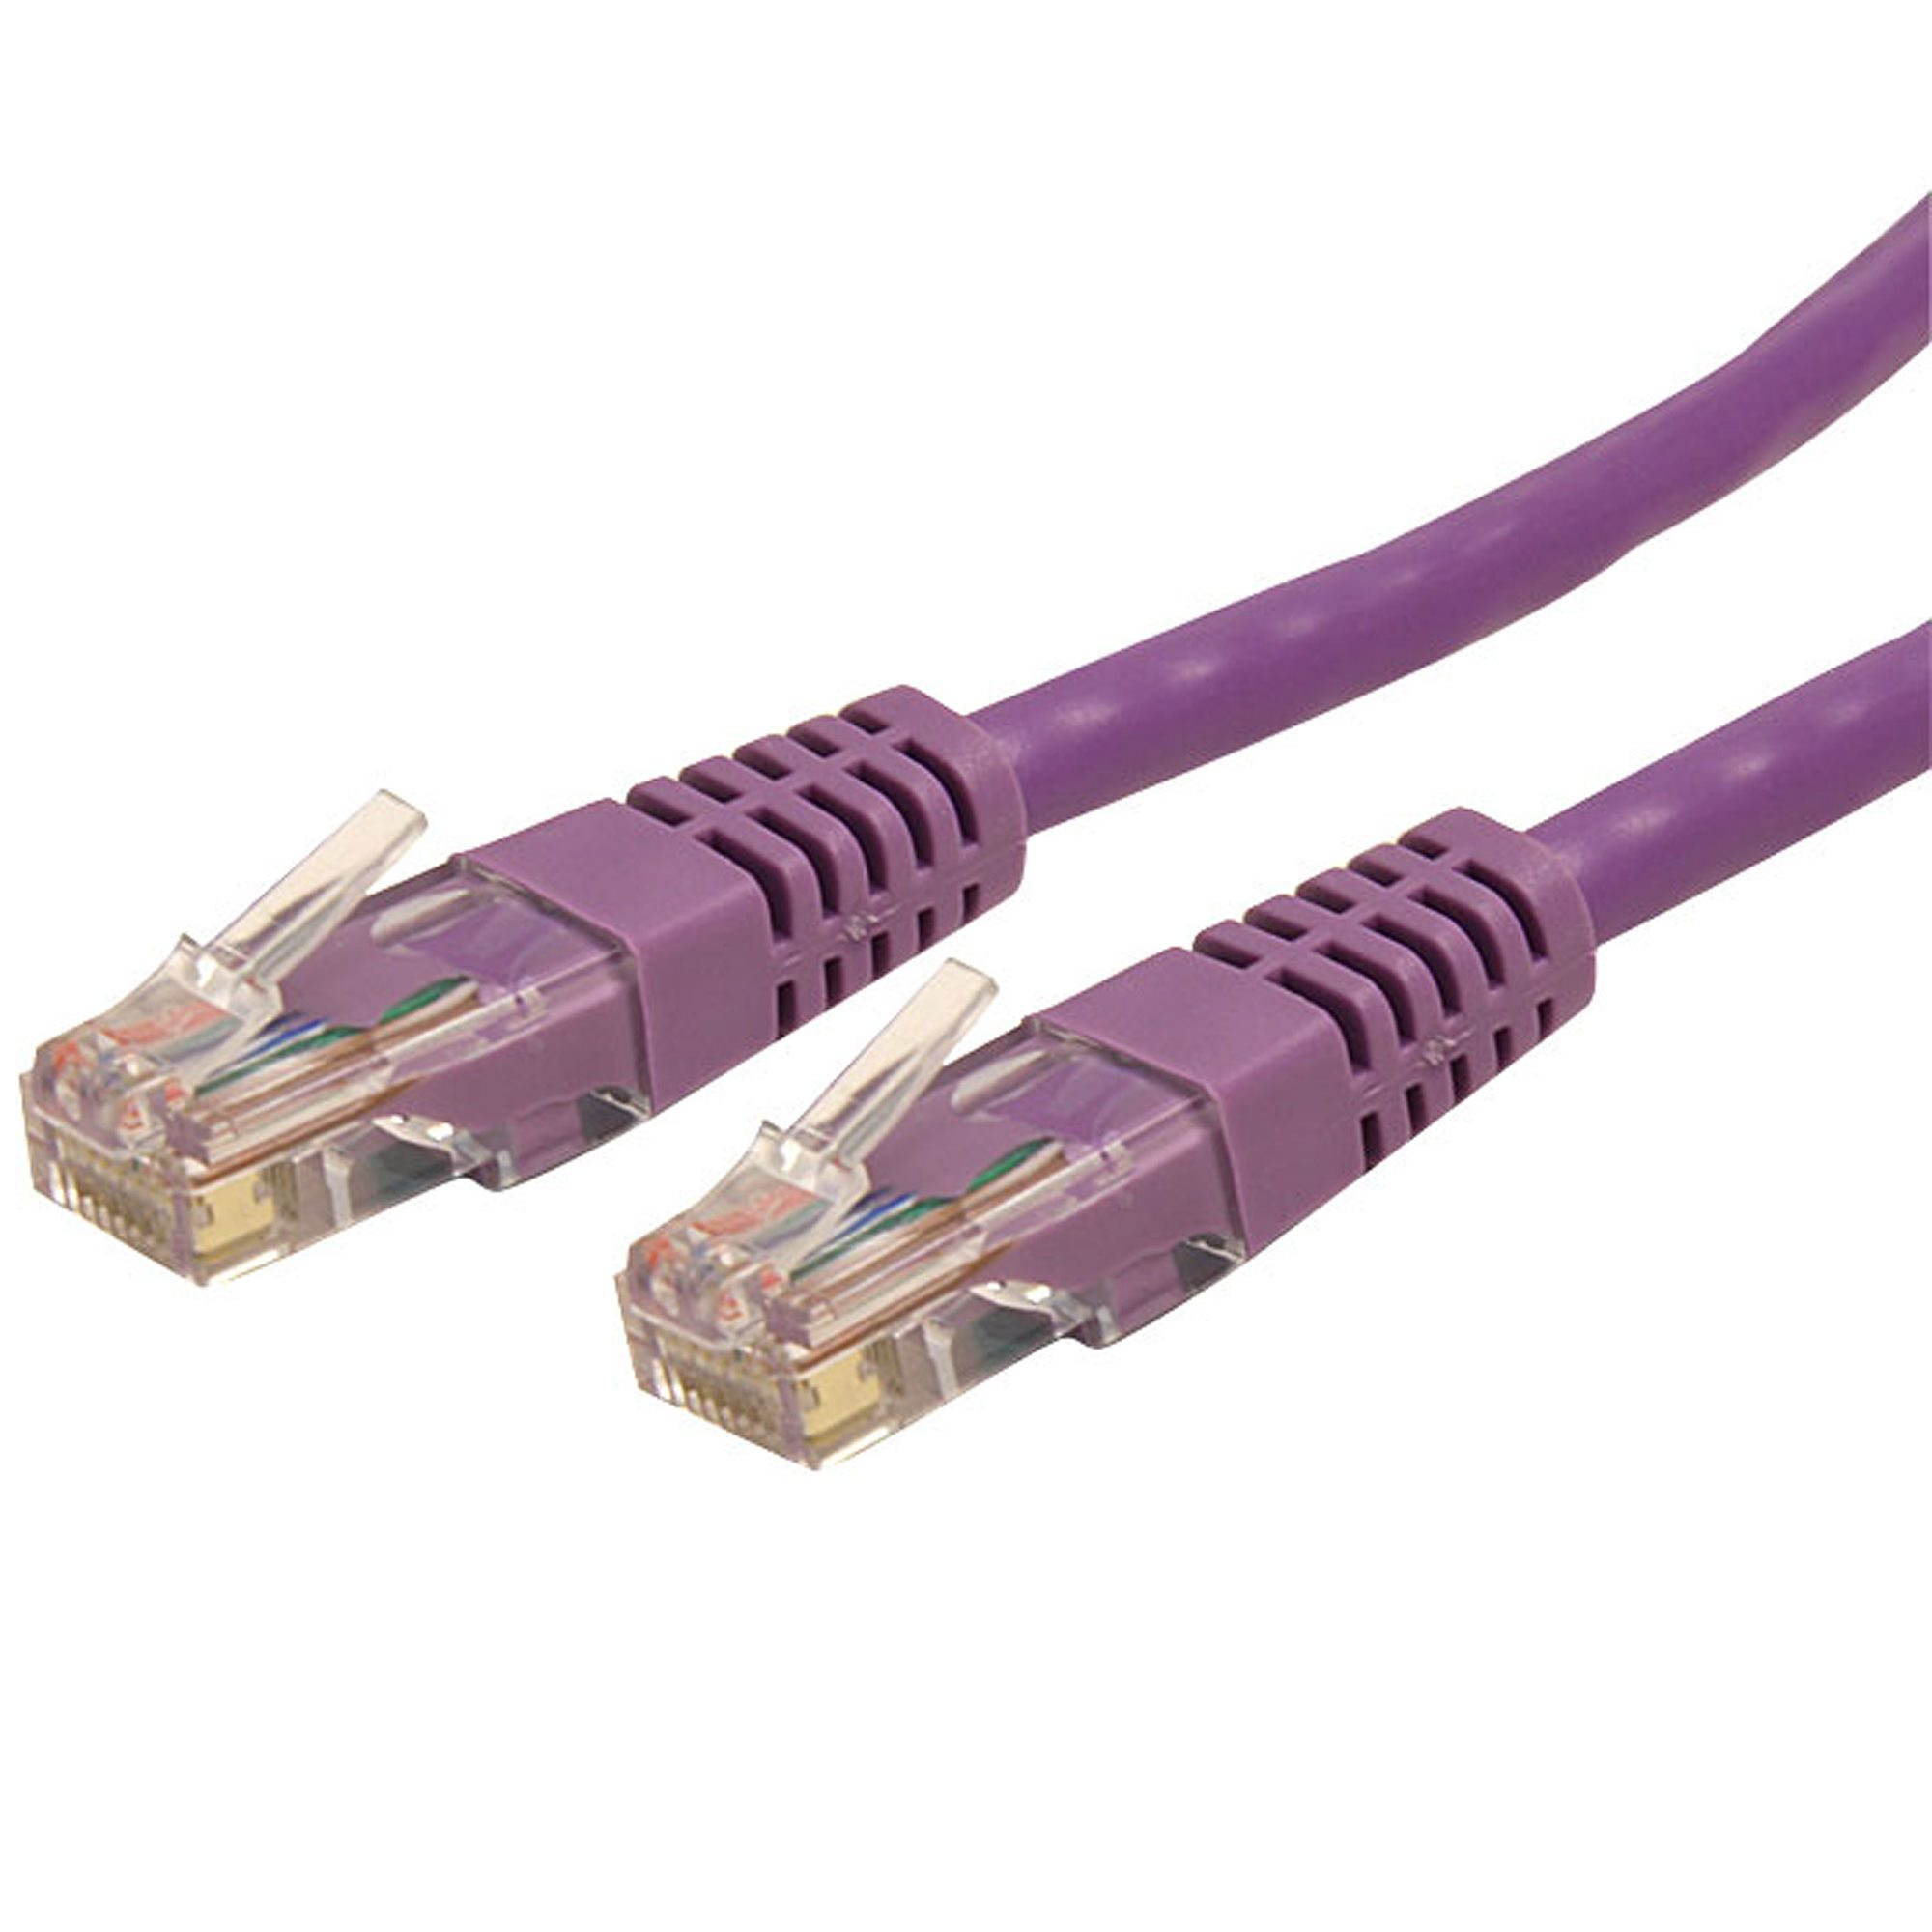 Cable 1.8M Gigabit  Red  Cat6 Utp Rj45  Morado  Startech C6Patch6Pl